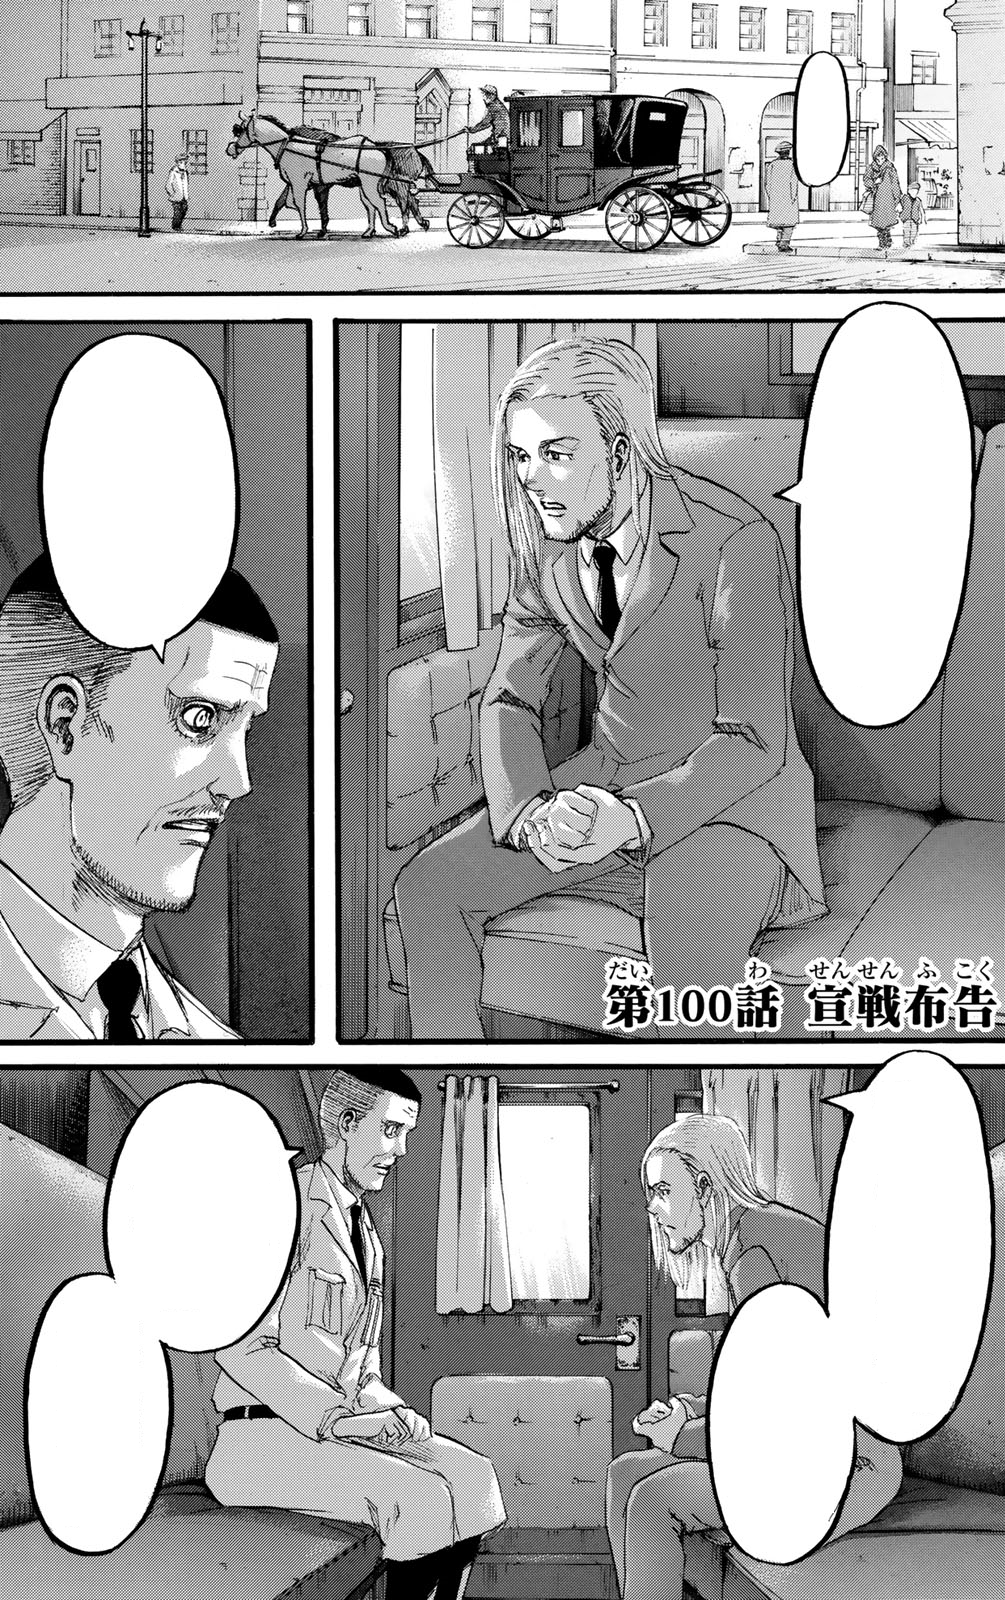 100+] Aot Manga Backgrounds